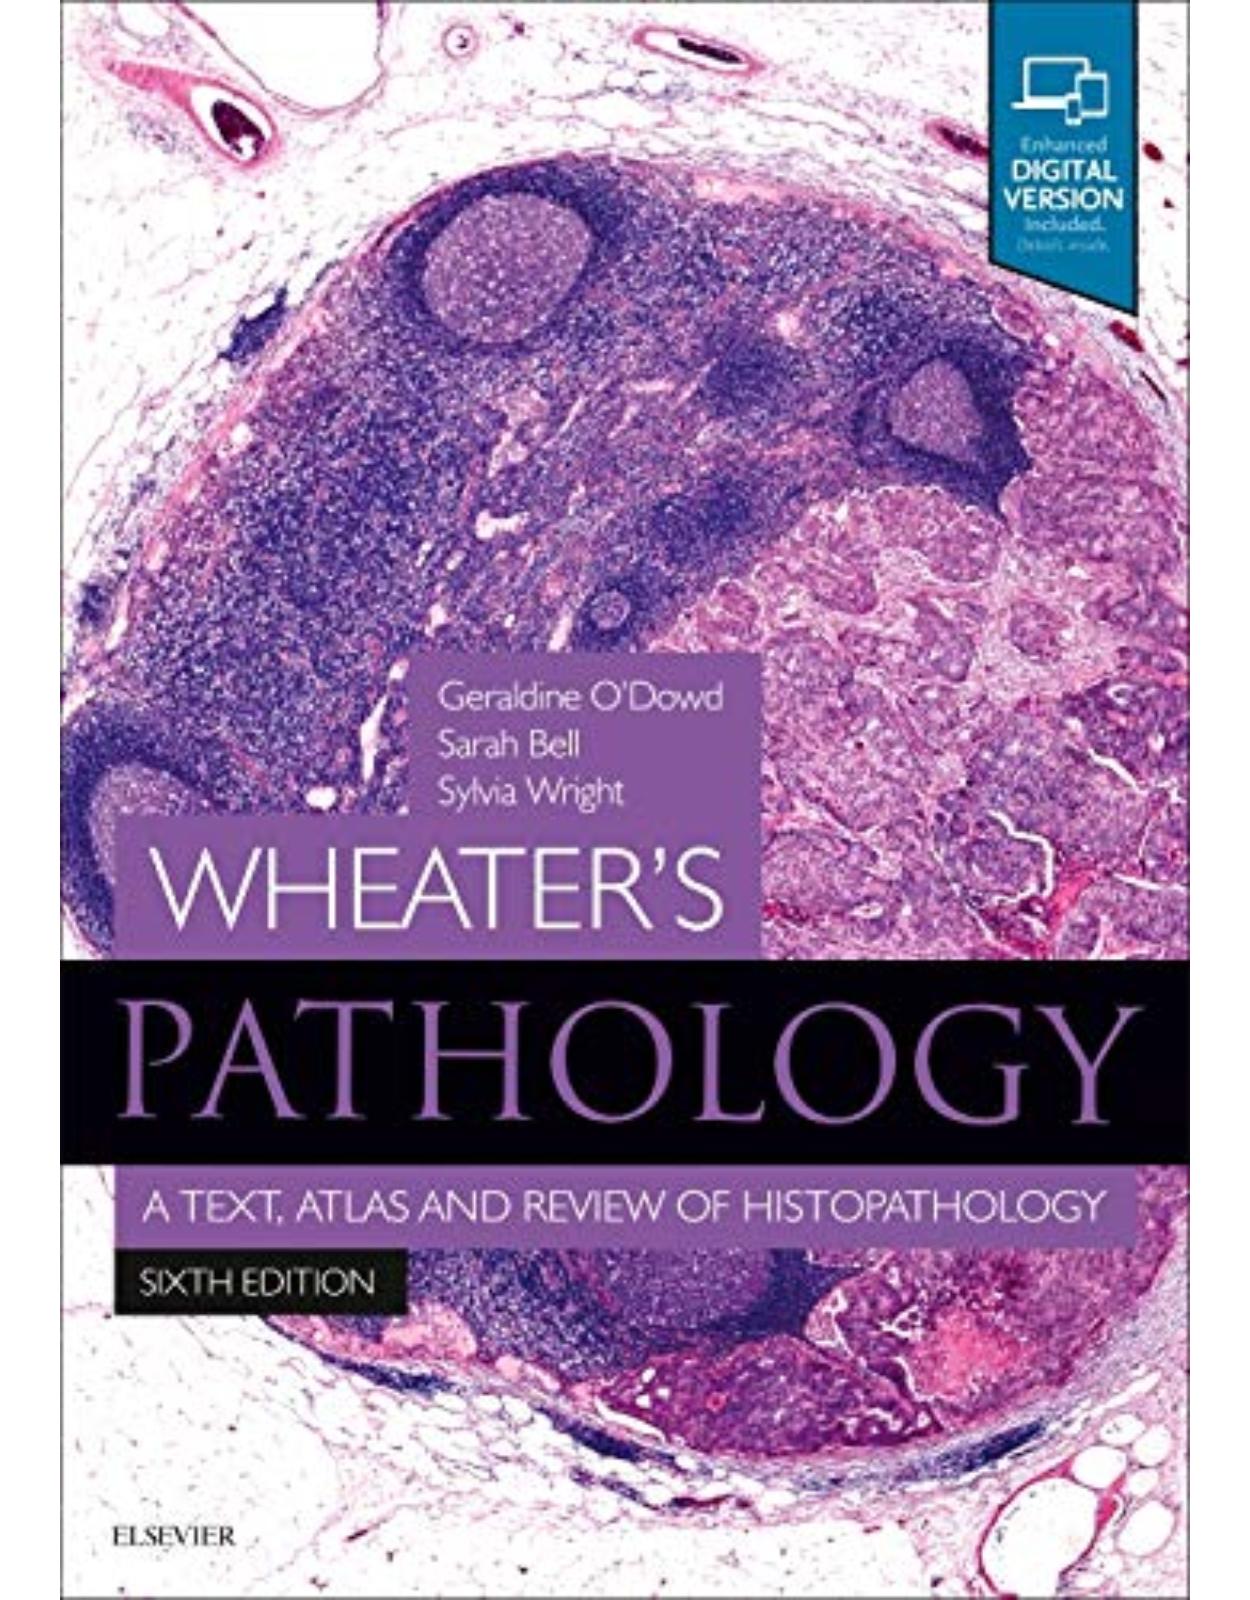 Wheater's Pathology: A Text, Atlas and Review of Histopathology, 6e